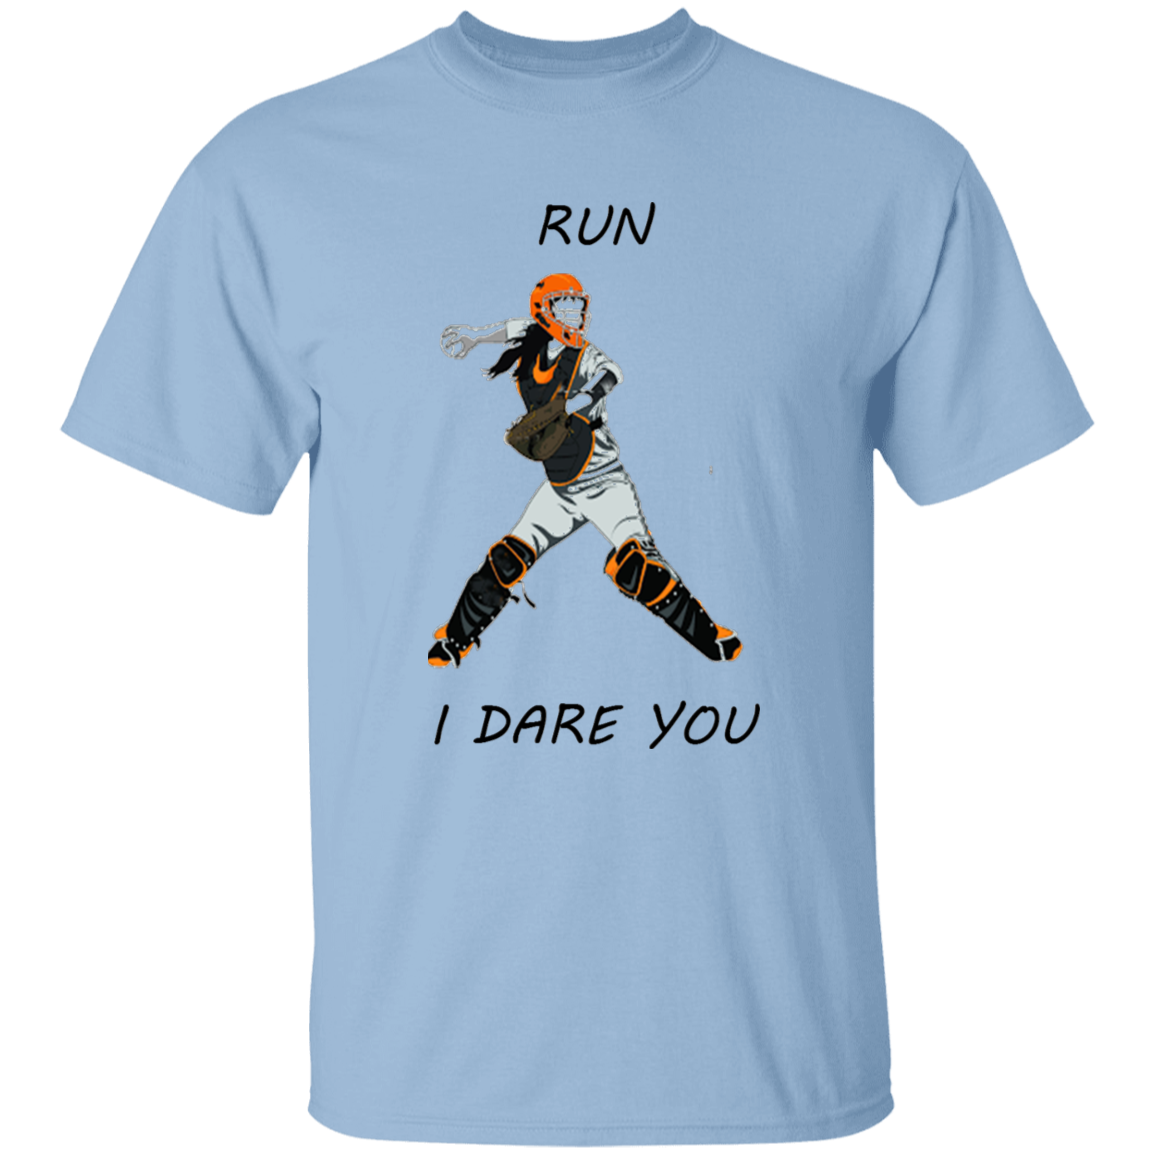 Softball catcher - run - T-Shirt (youth)